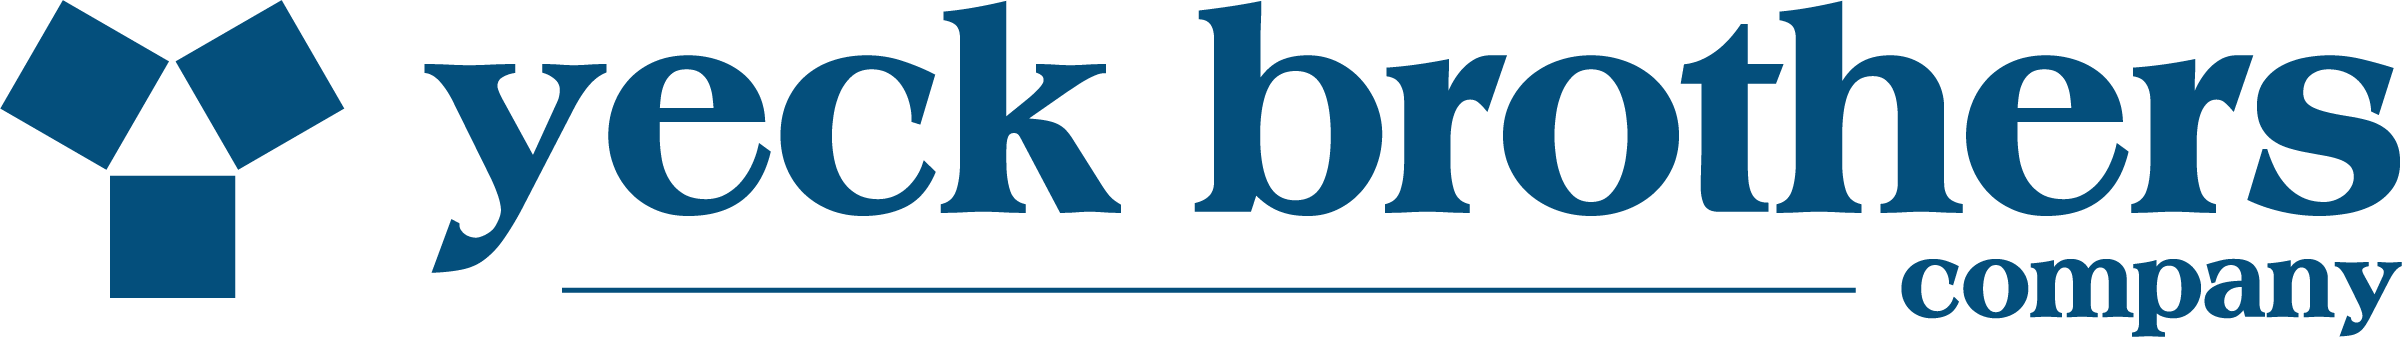 Yeck Brothers Company logo